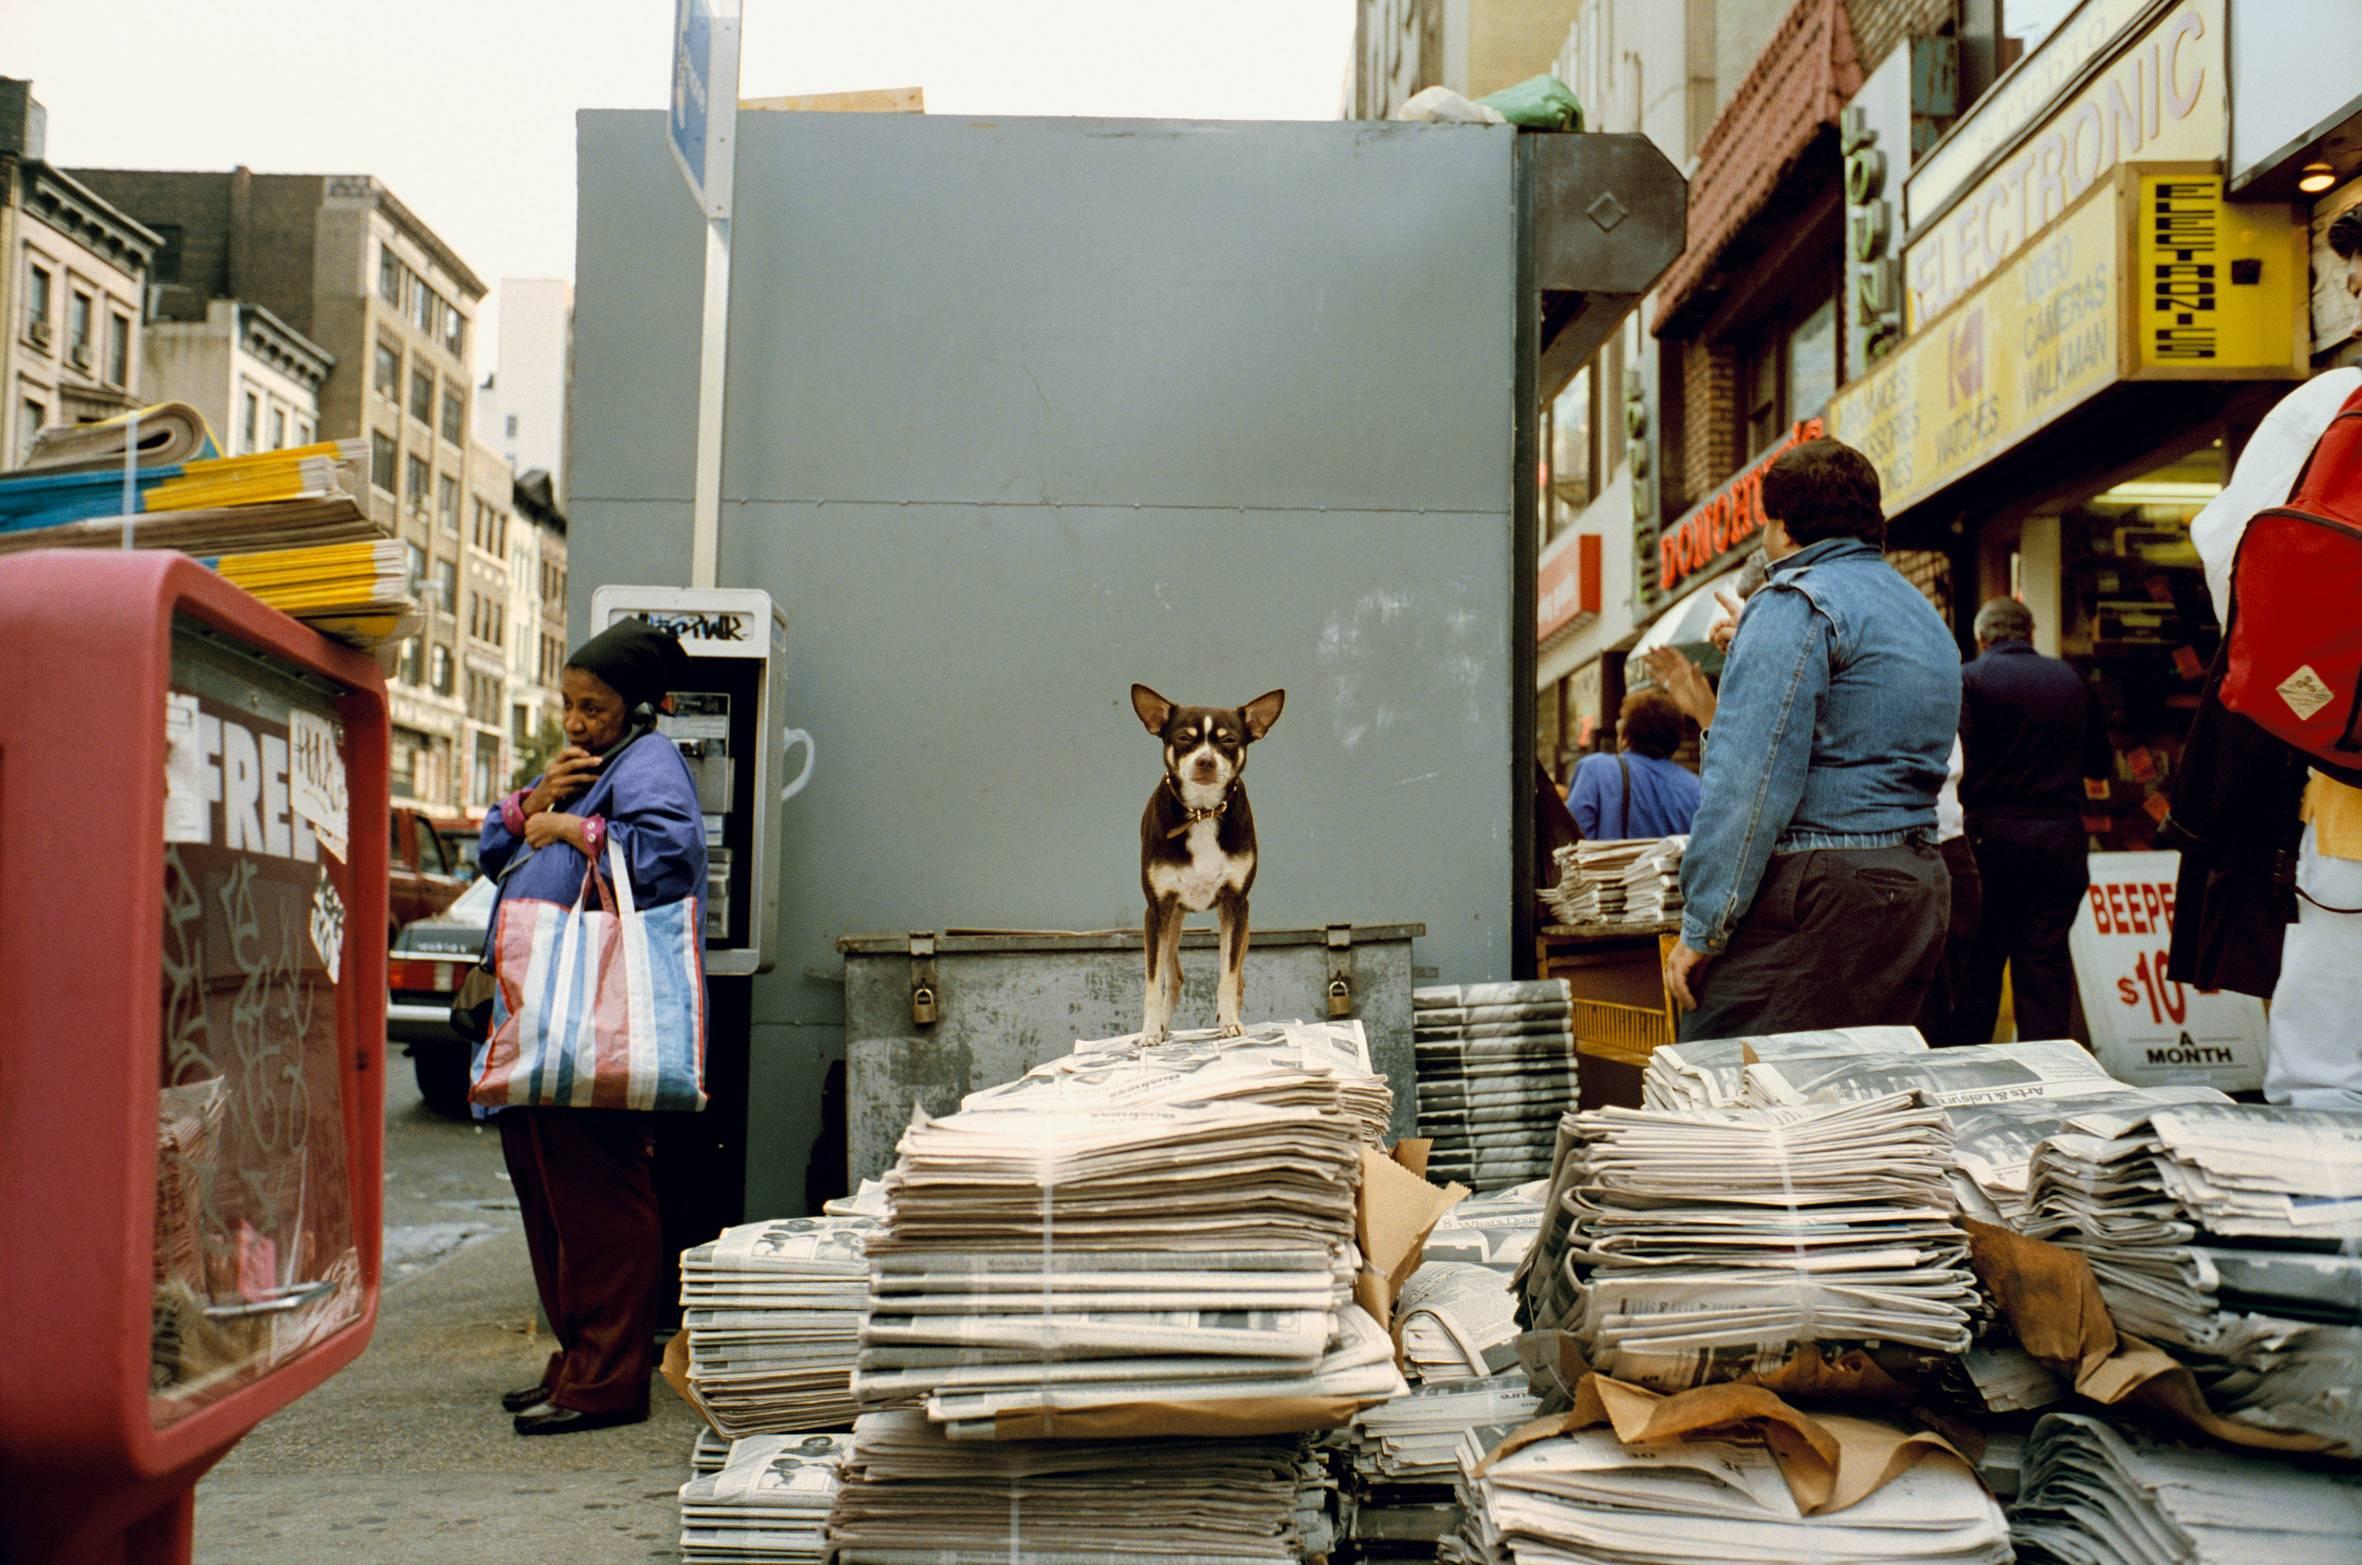 Jeff Mermelstein Color Photograph - New York City 1993